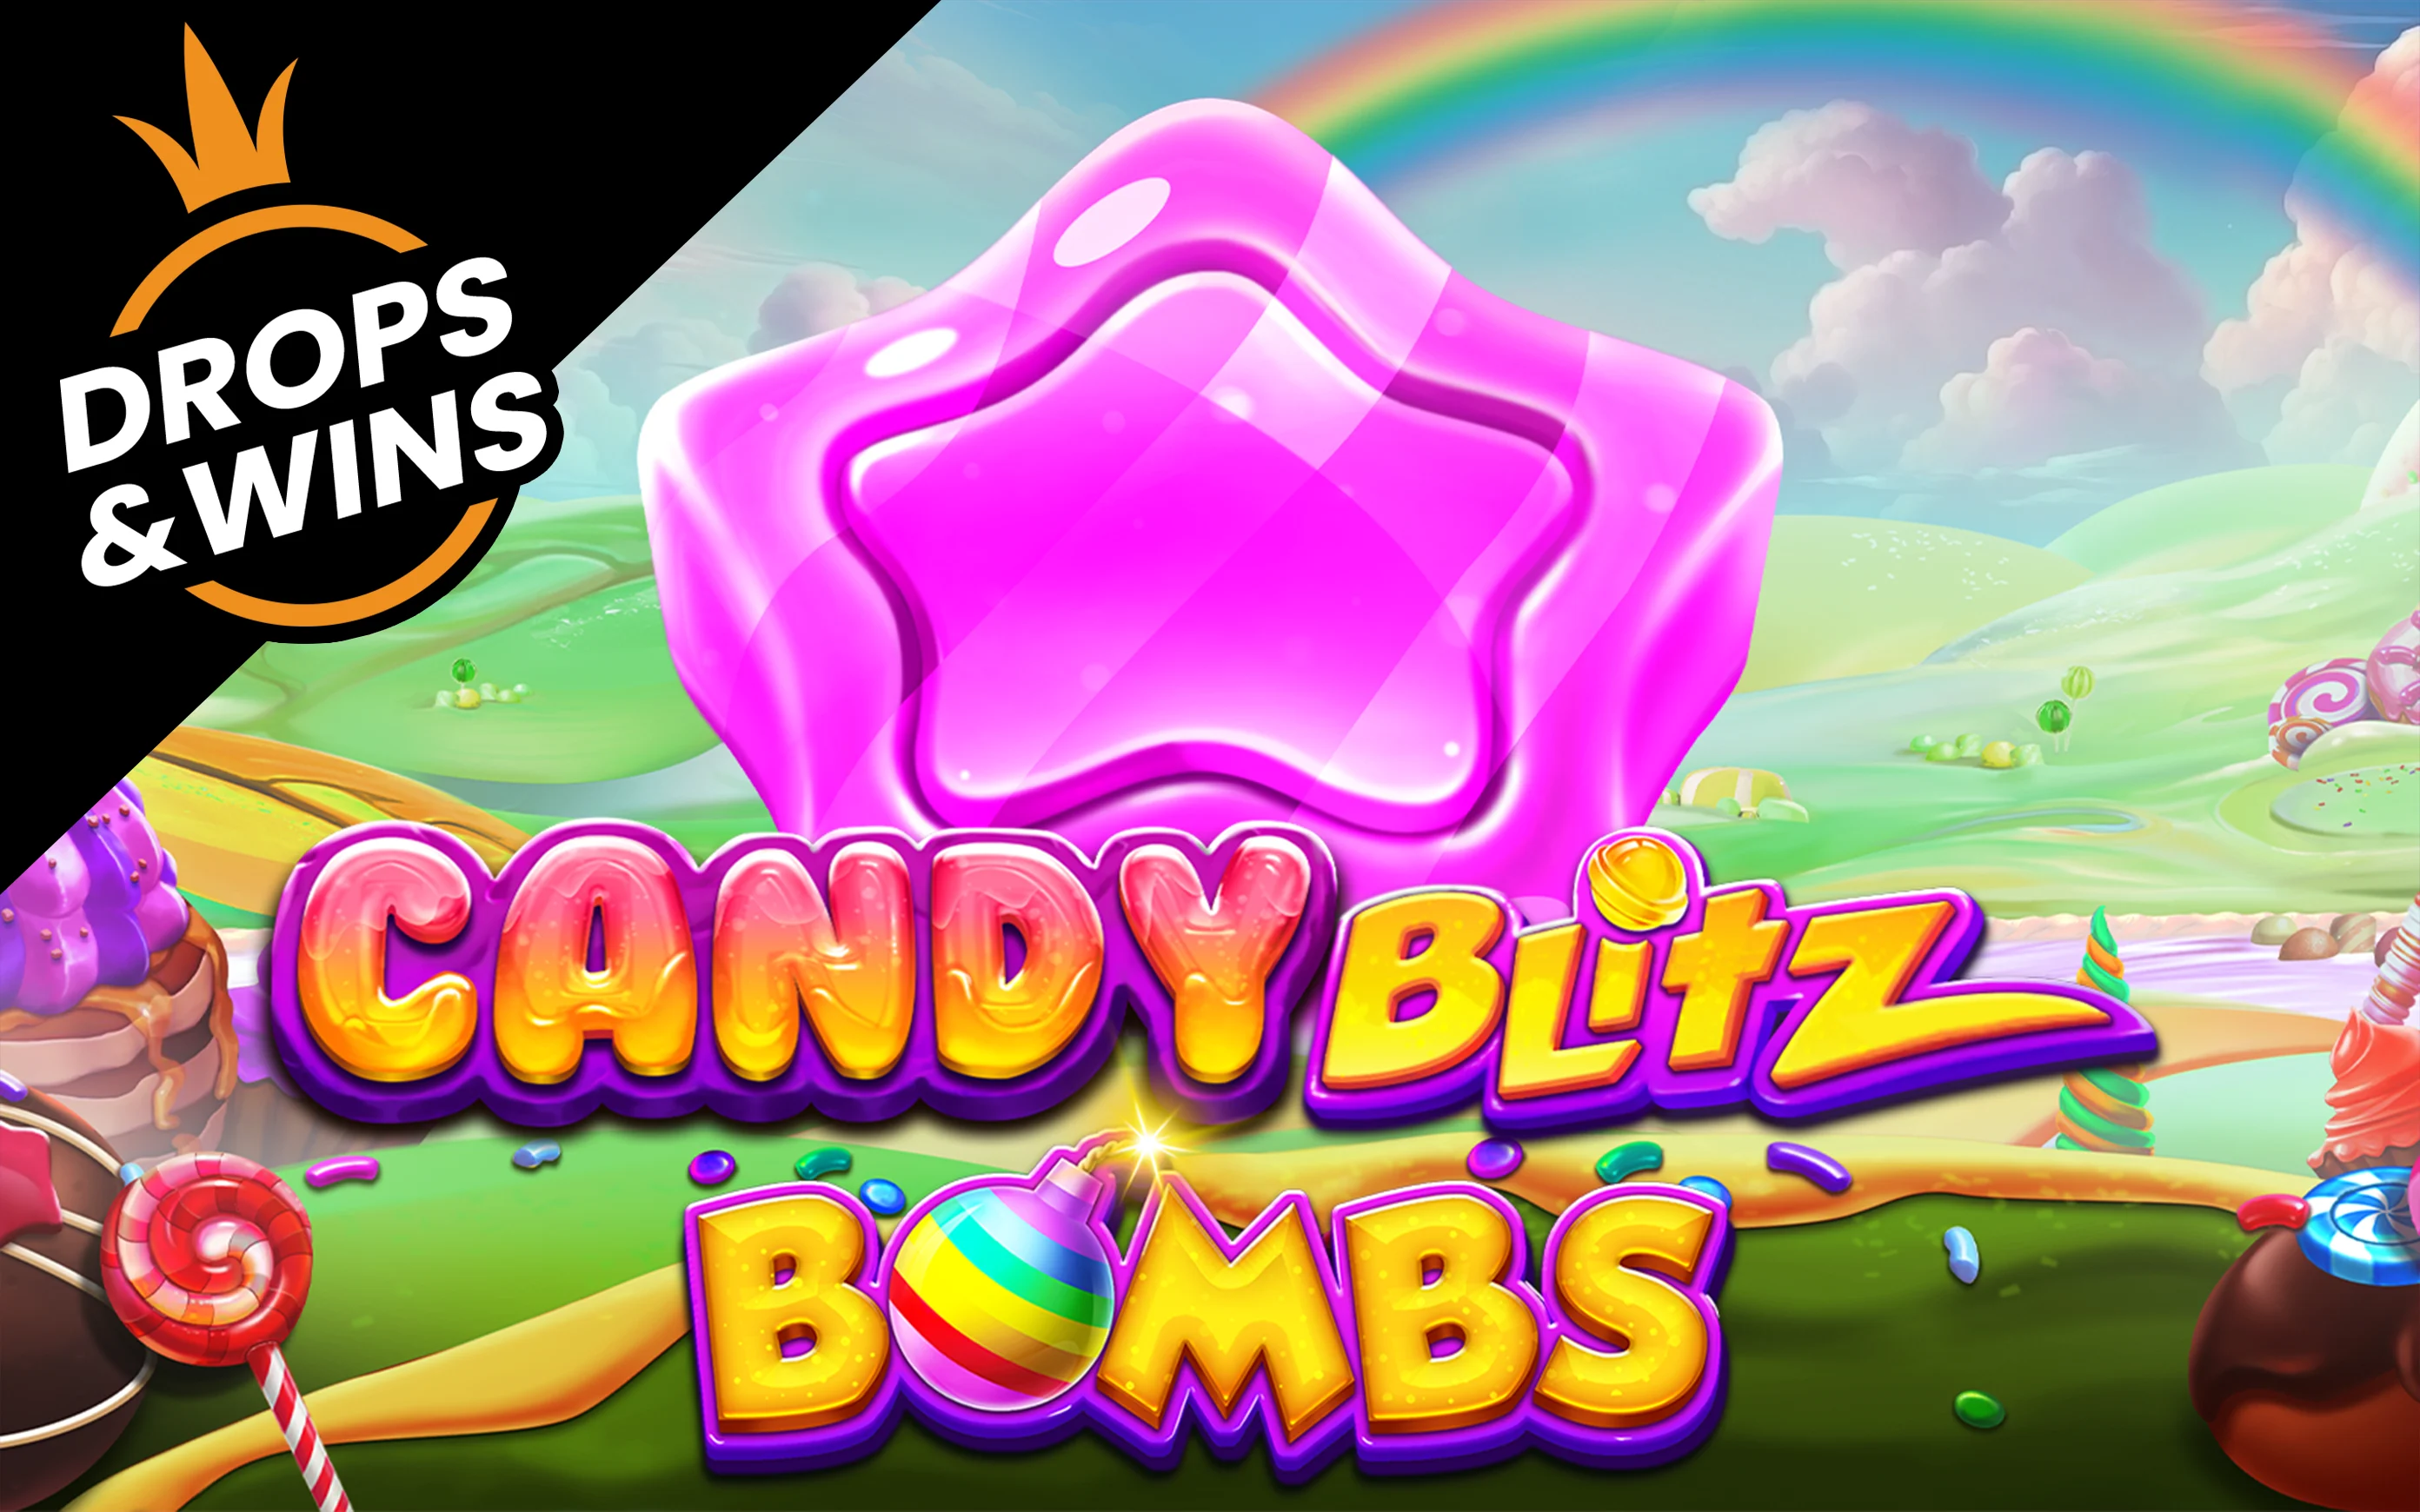 Gioca a Candy Blitz Bombs sul casino online Starcasino.be